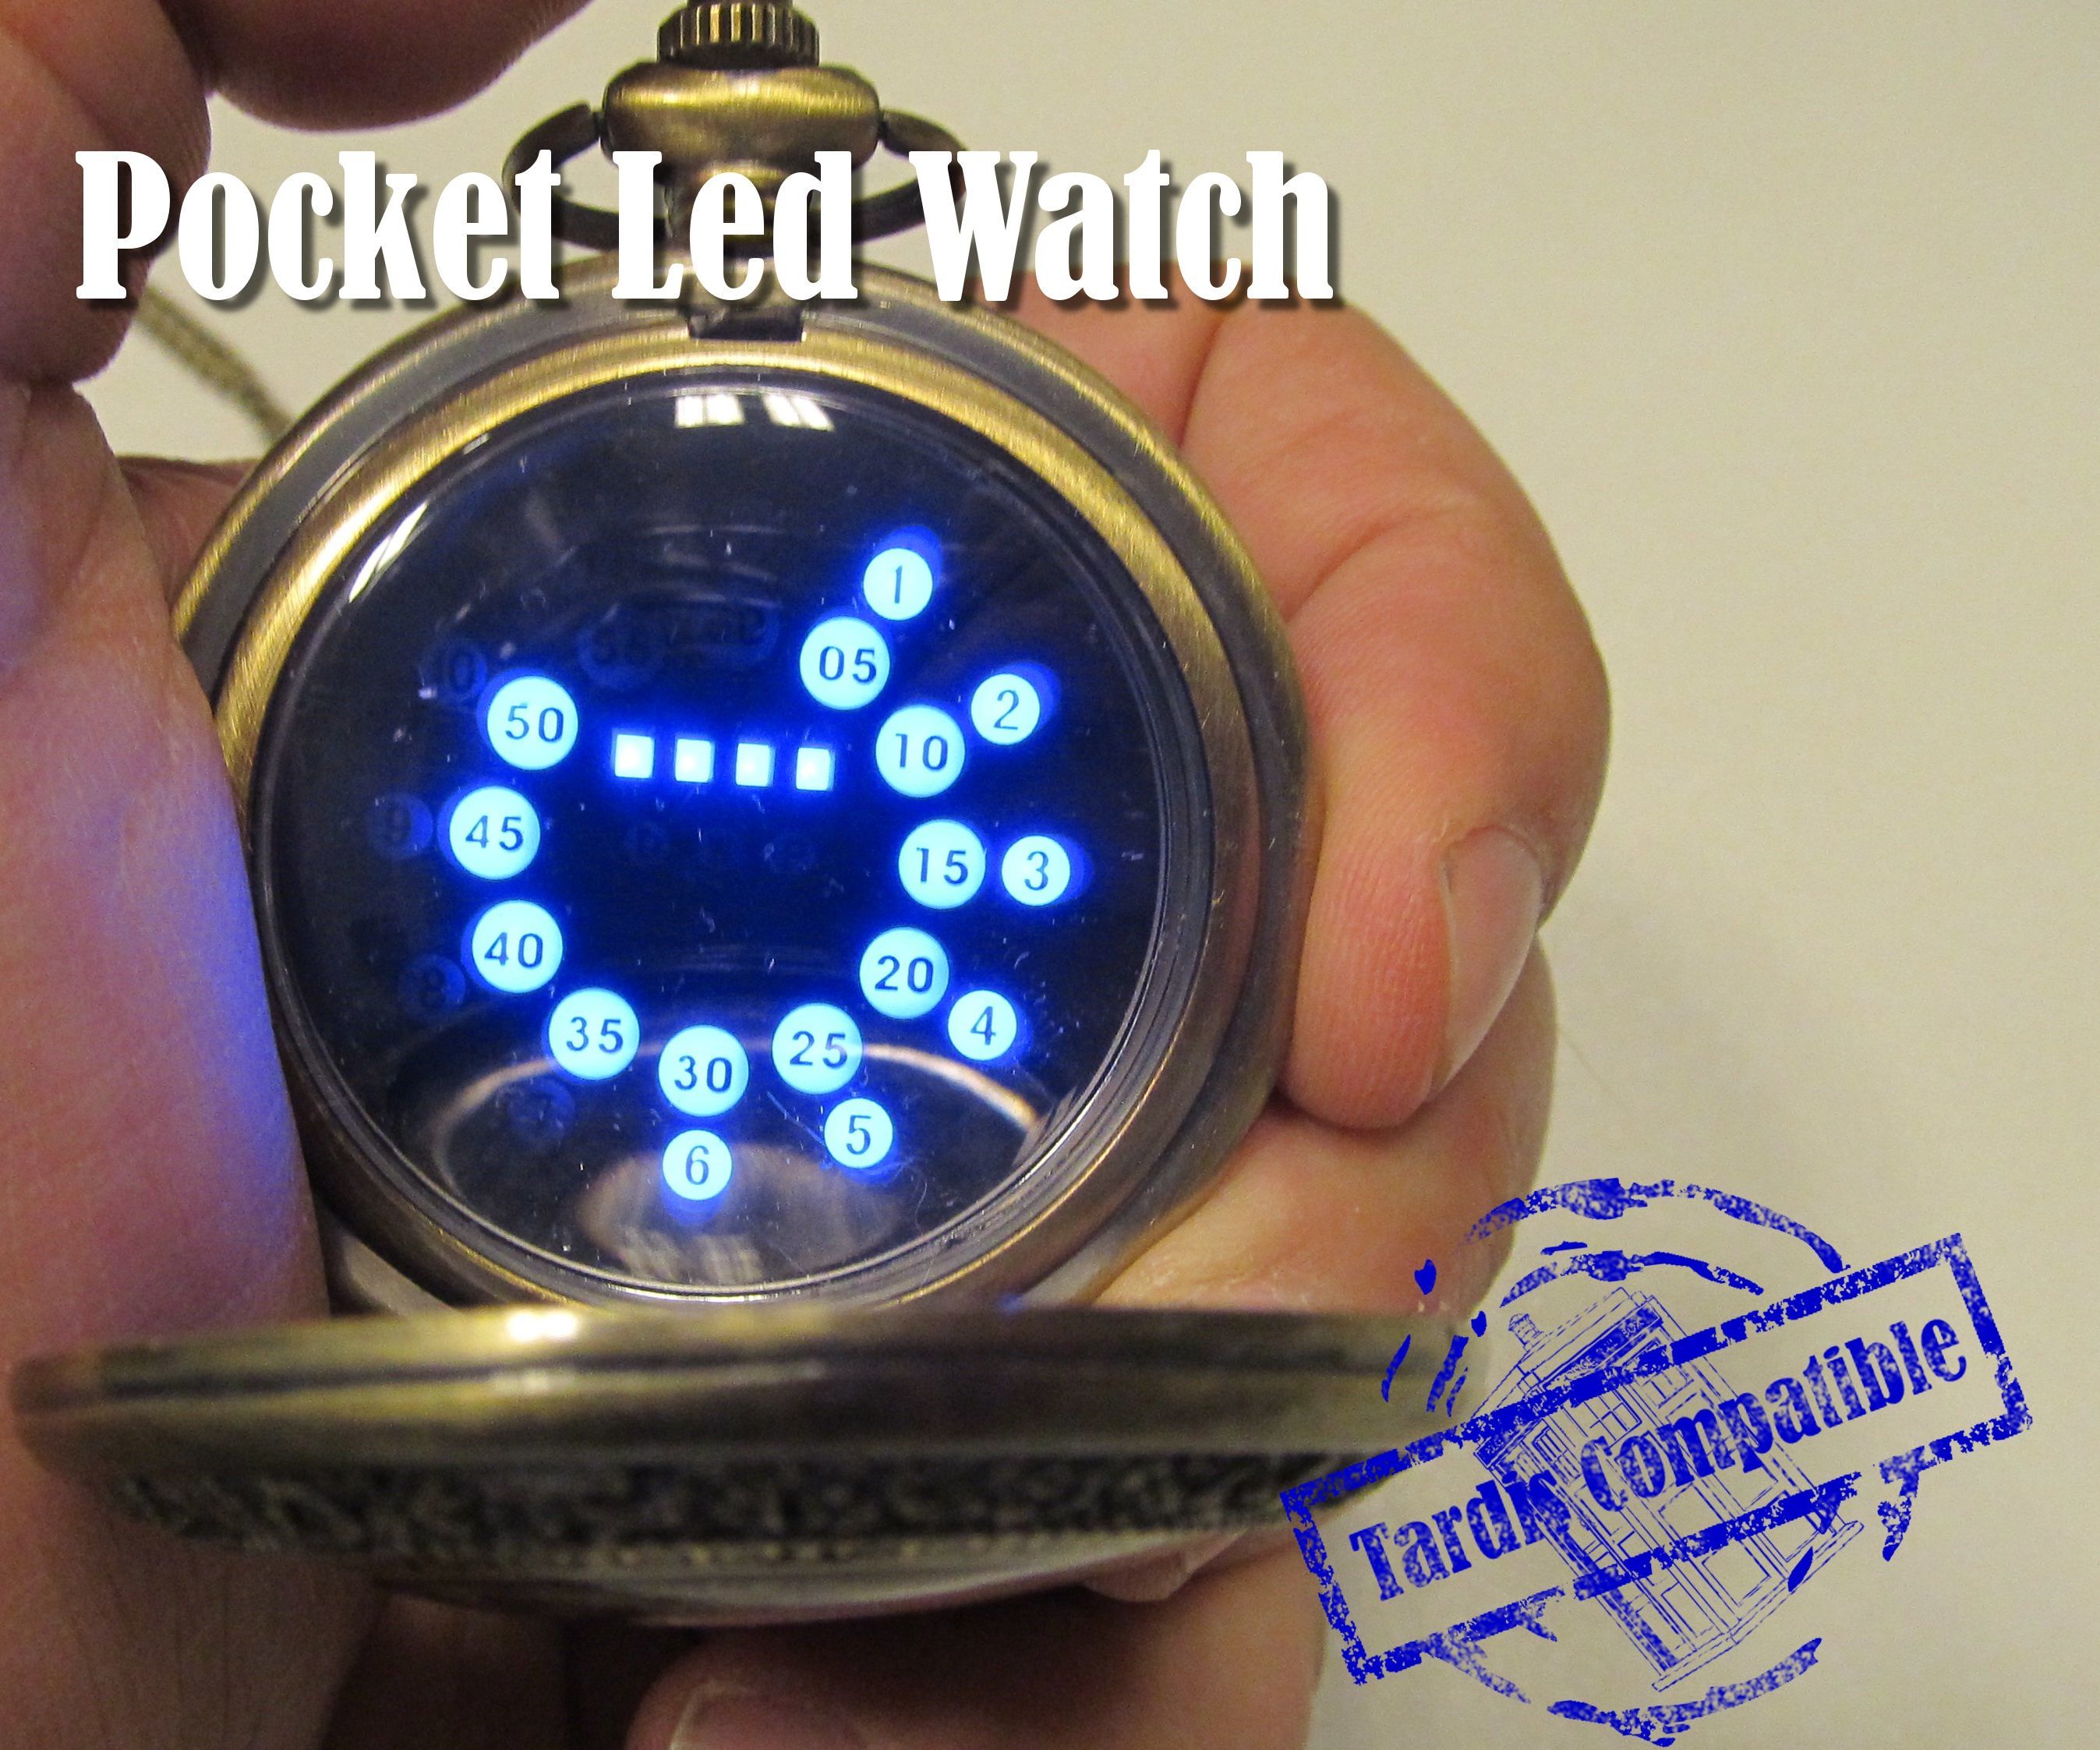 Led Pocket Watch, a Geeky One